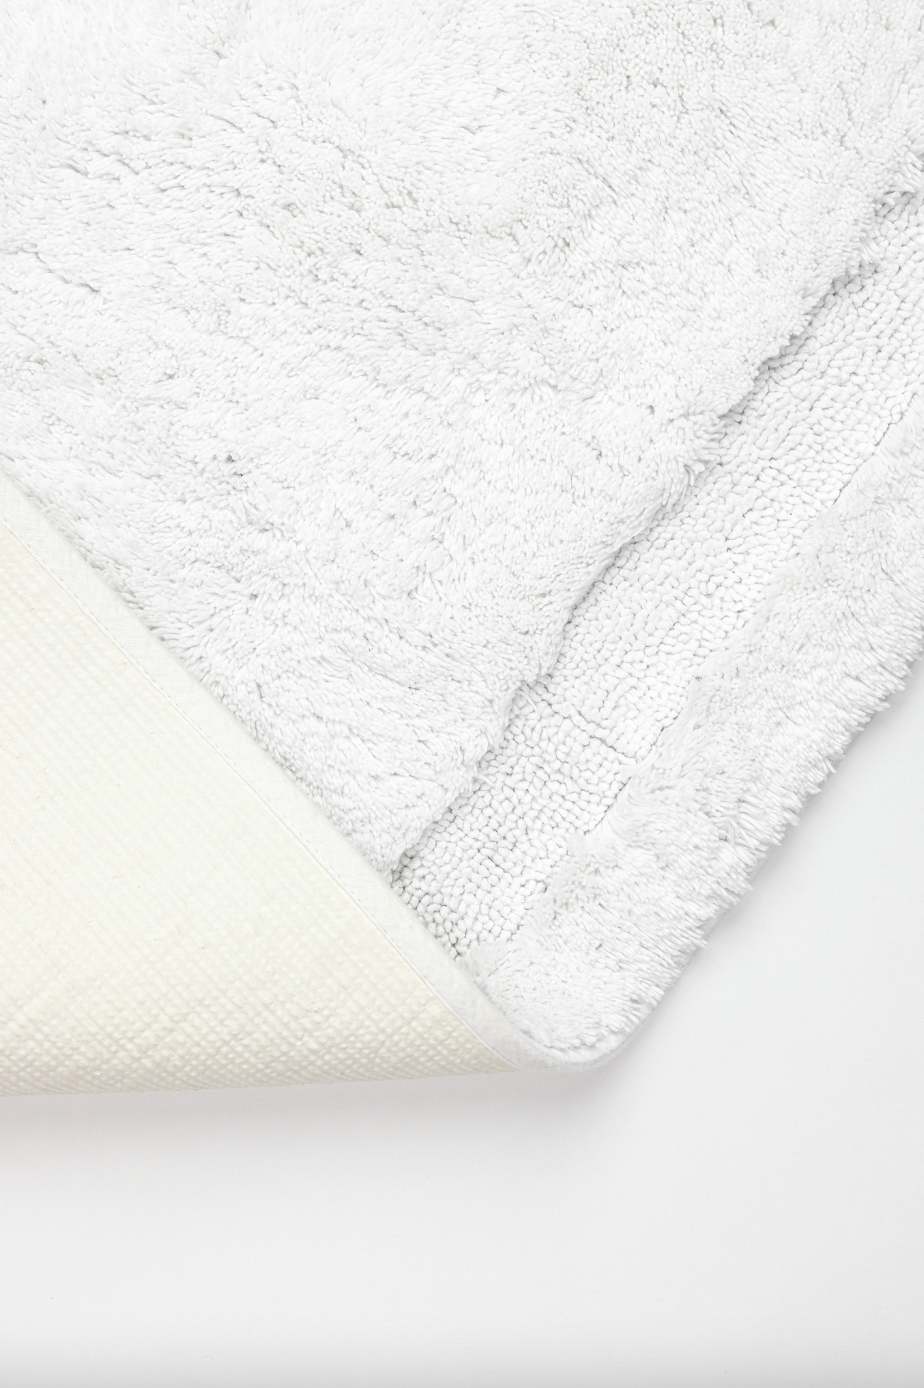 Large Hotel Cotton Bath Mat - Medium Grey/White - Dormify  Reversible bath  rugs, Bathroom rugs and mats, Cotton bath rug